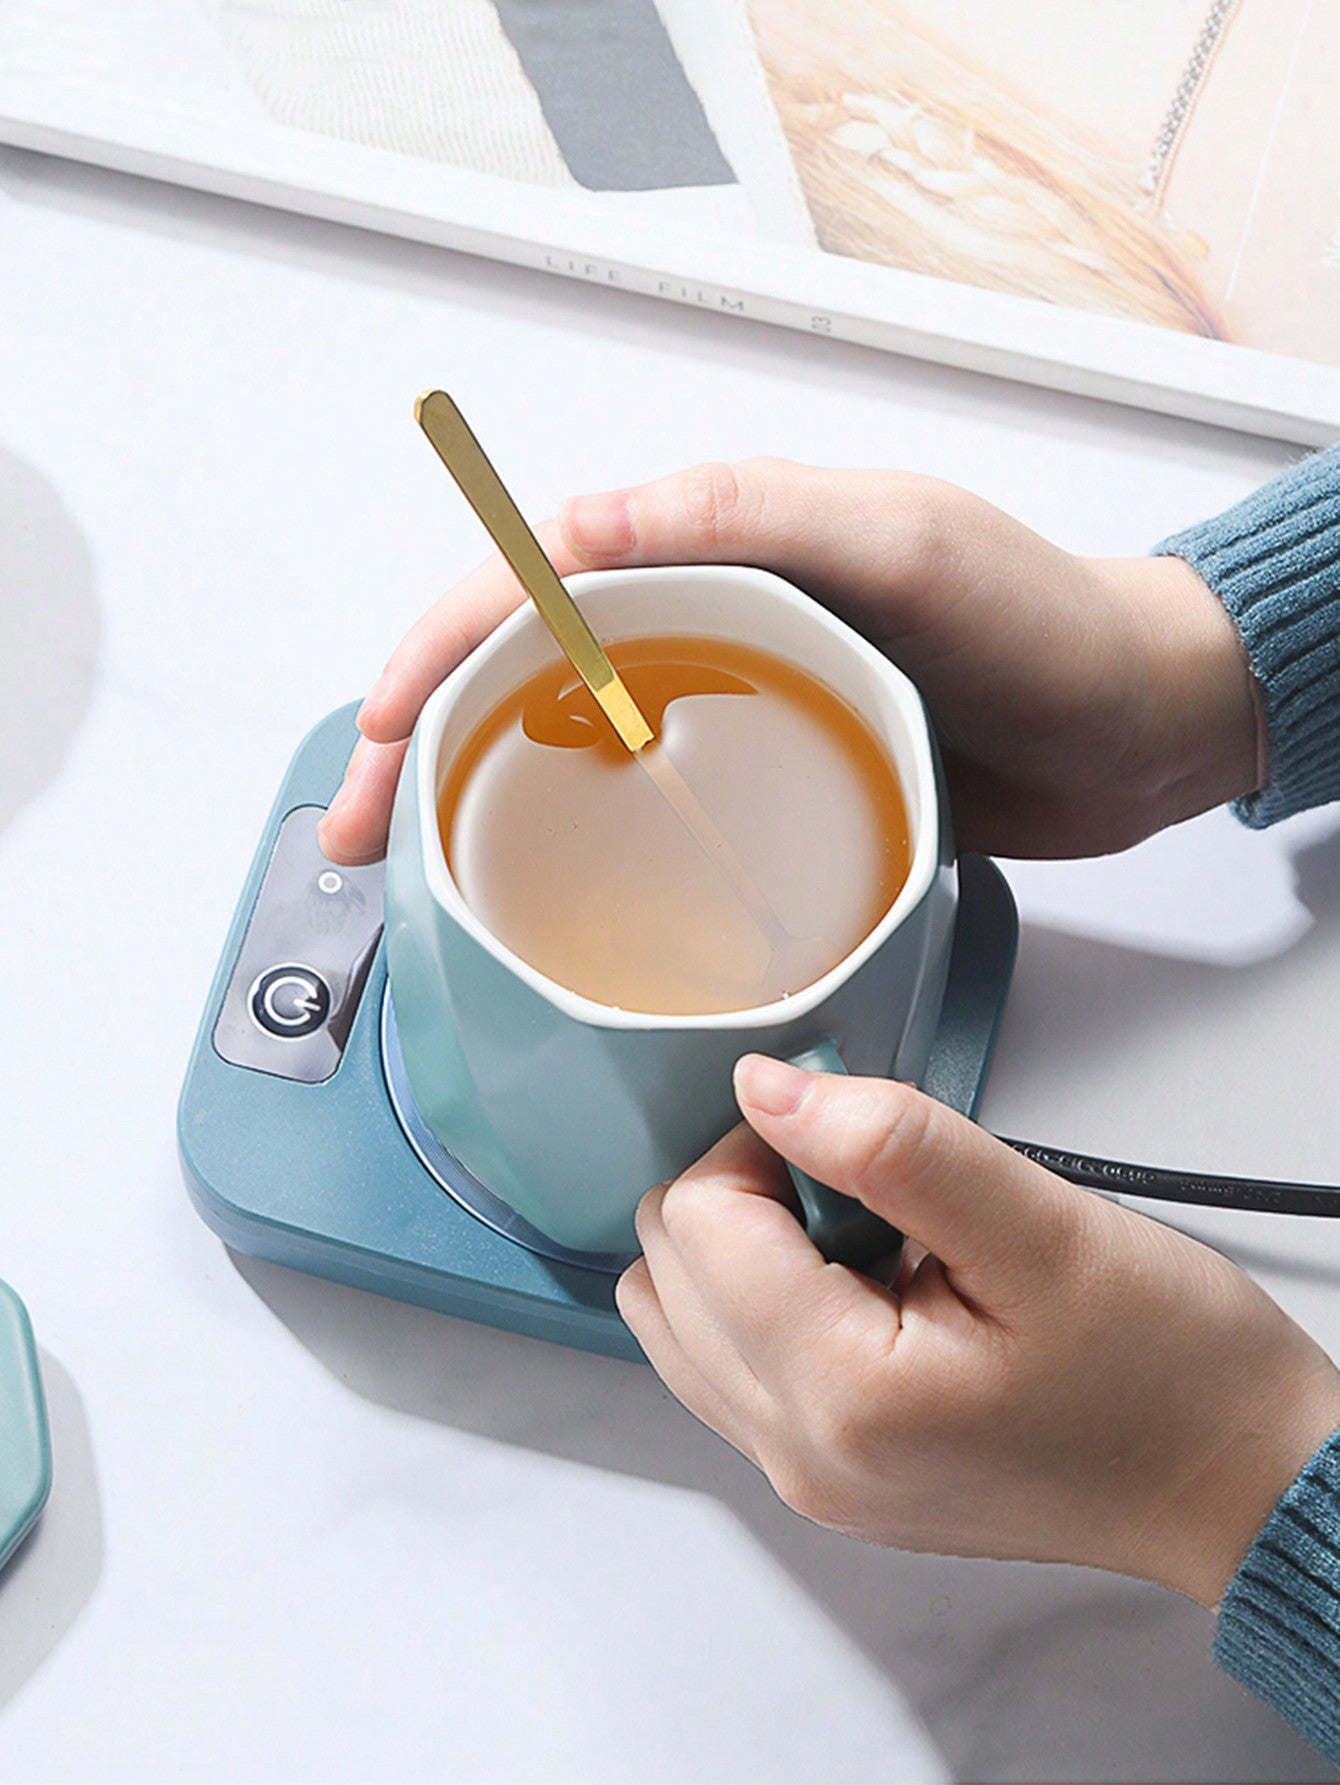 USB Portable Heating Coaster mat warmer pad Heat Coffee milk Tea